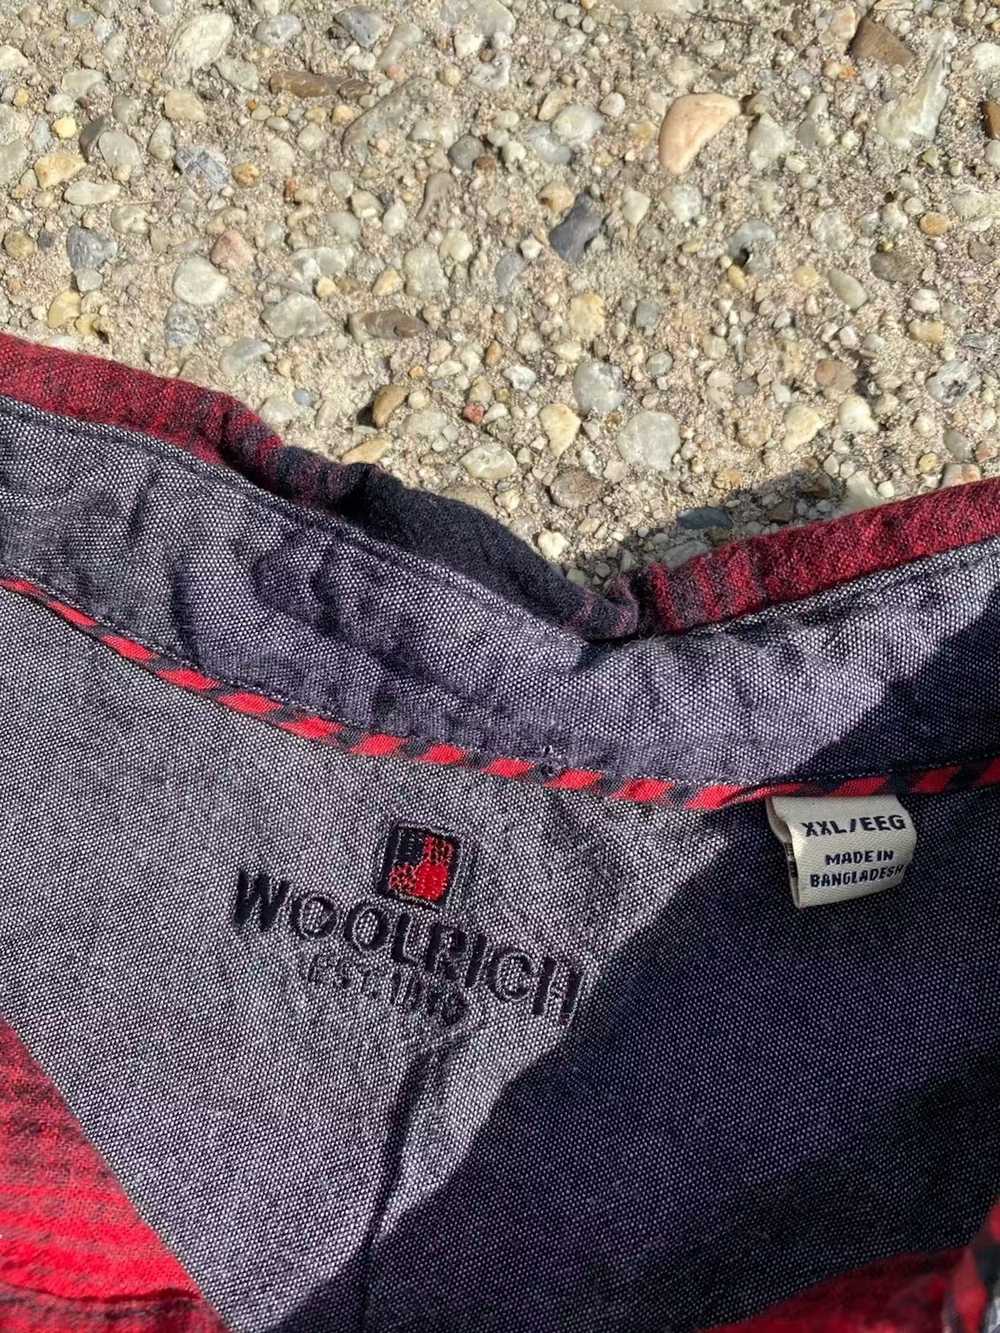 Woolrich Woolen Mills Vintage Flannel Red/Black - image 2